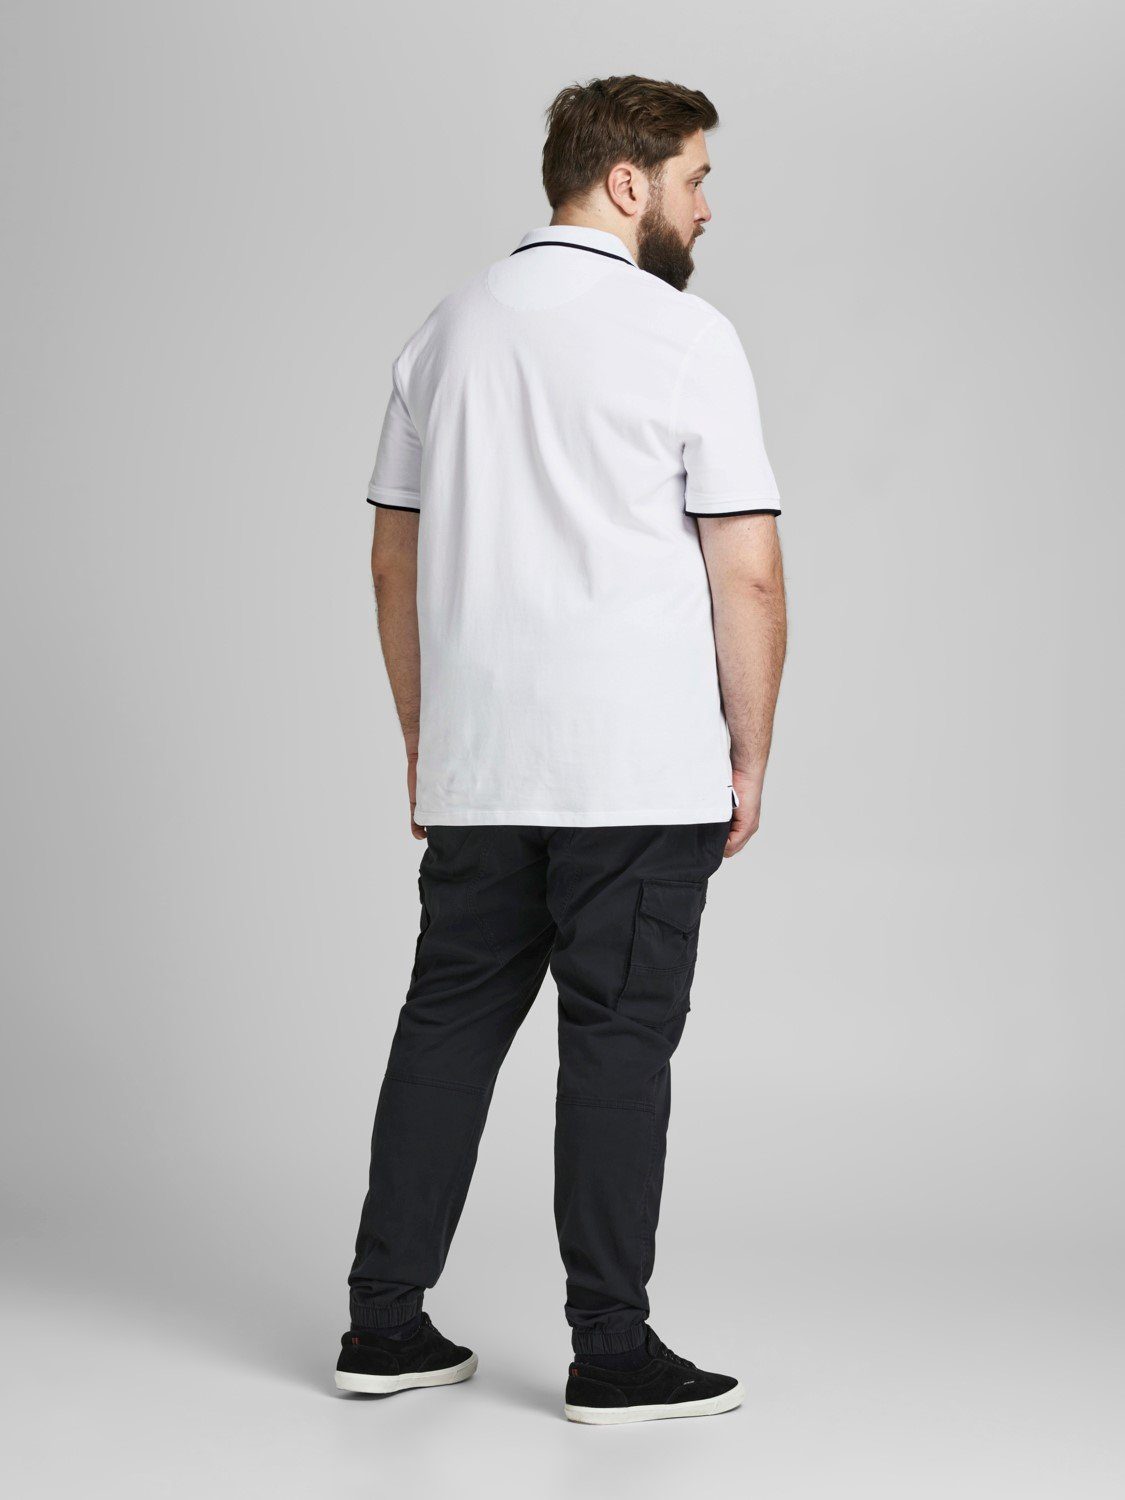 Sommer (1-tlg) in Weiß Jack Shirt & JJEPAULOS Pique Fit + Jones Polo 3615 Poloshirt Hemd